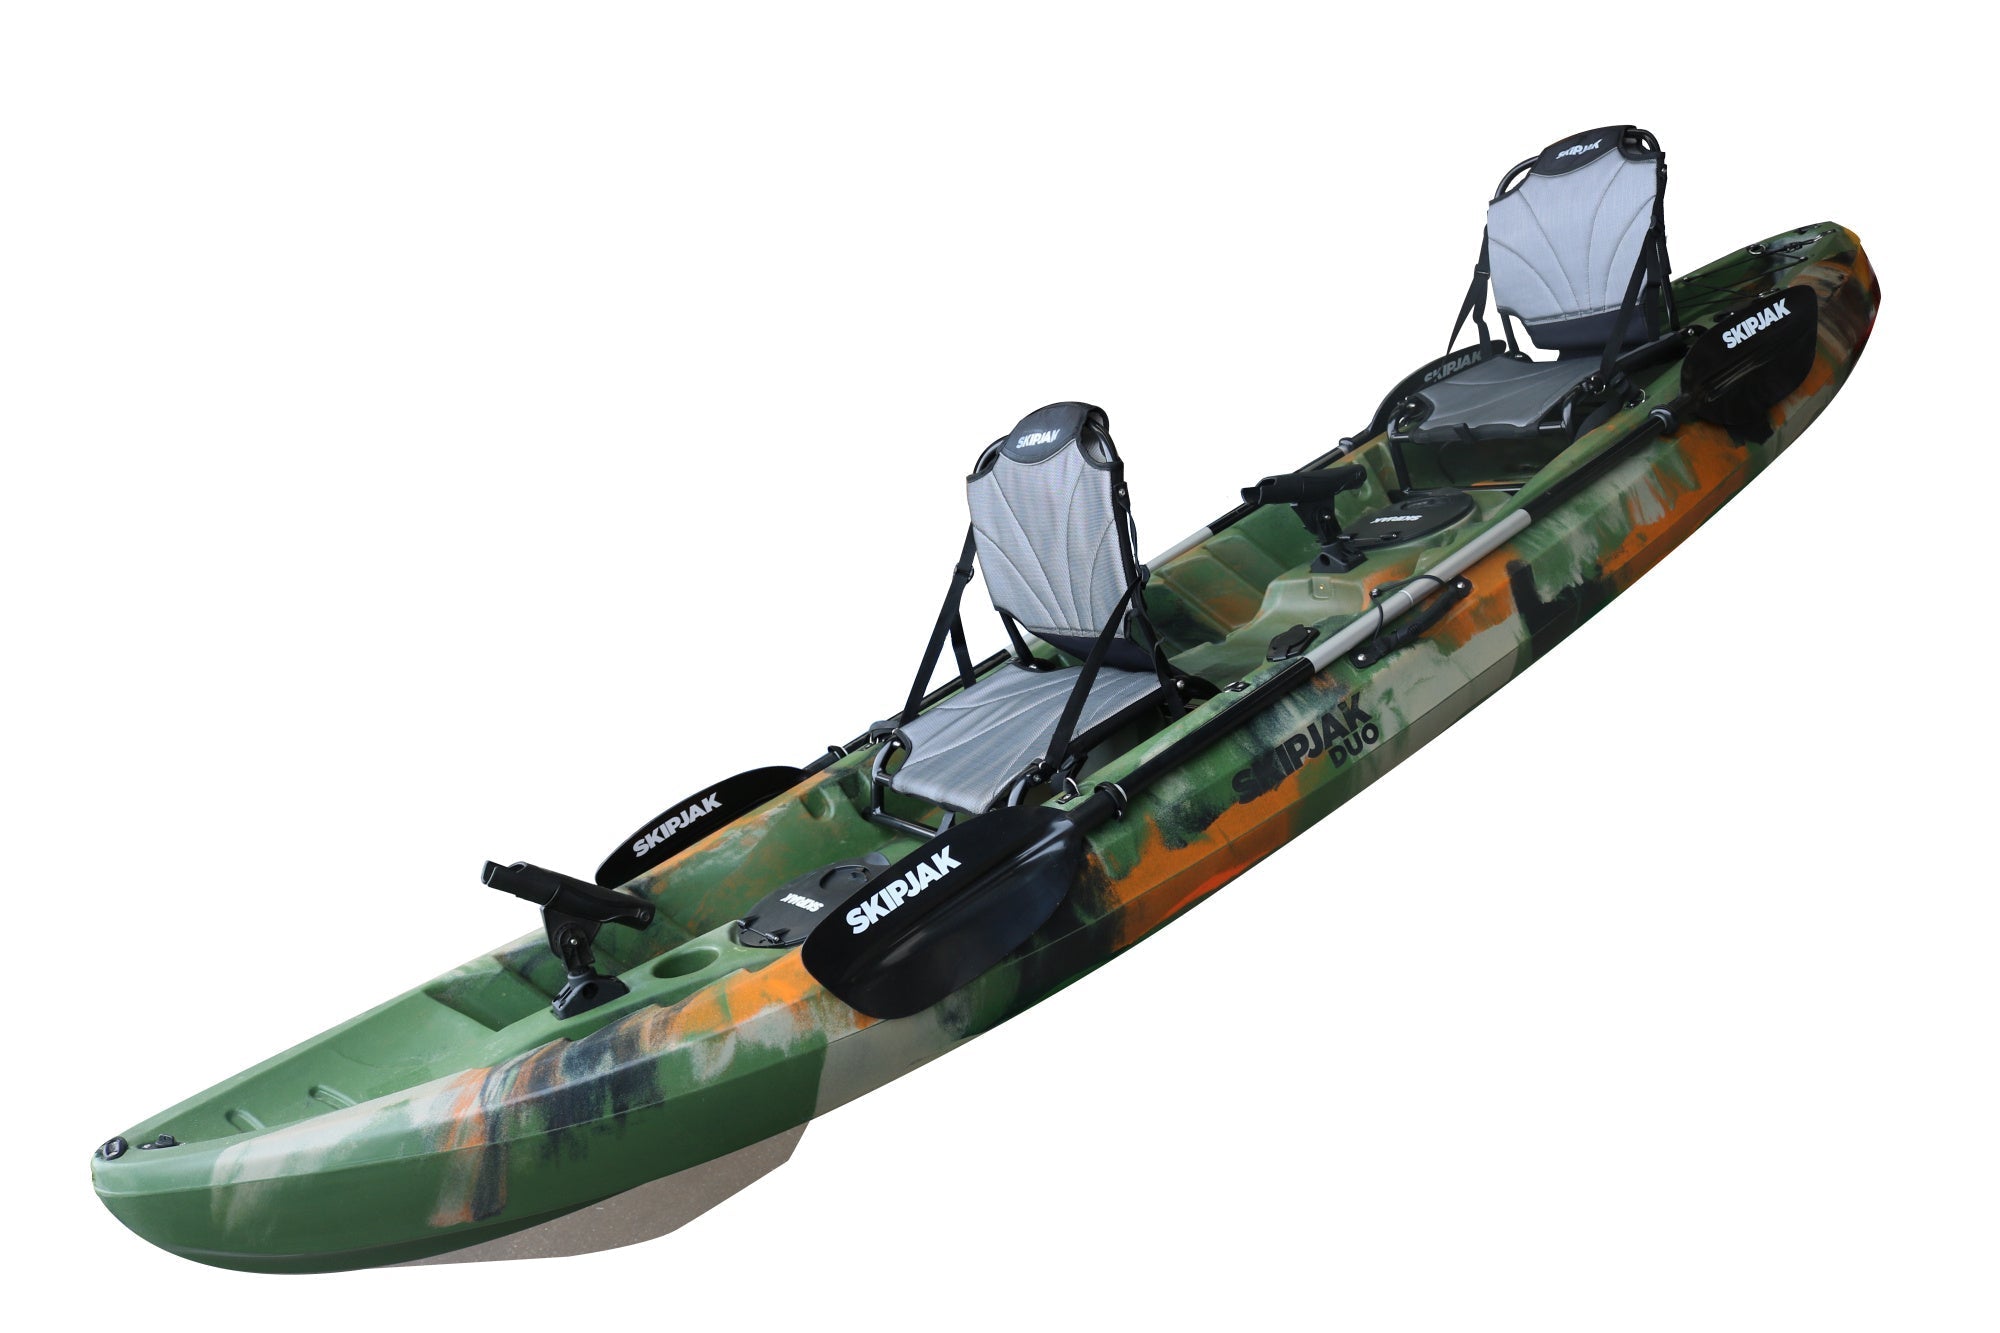 Fishjak DUO - The Fisherman's Tandem Kayaks Lake Land Kayaks Jungle Camo 